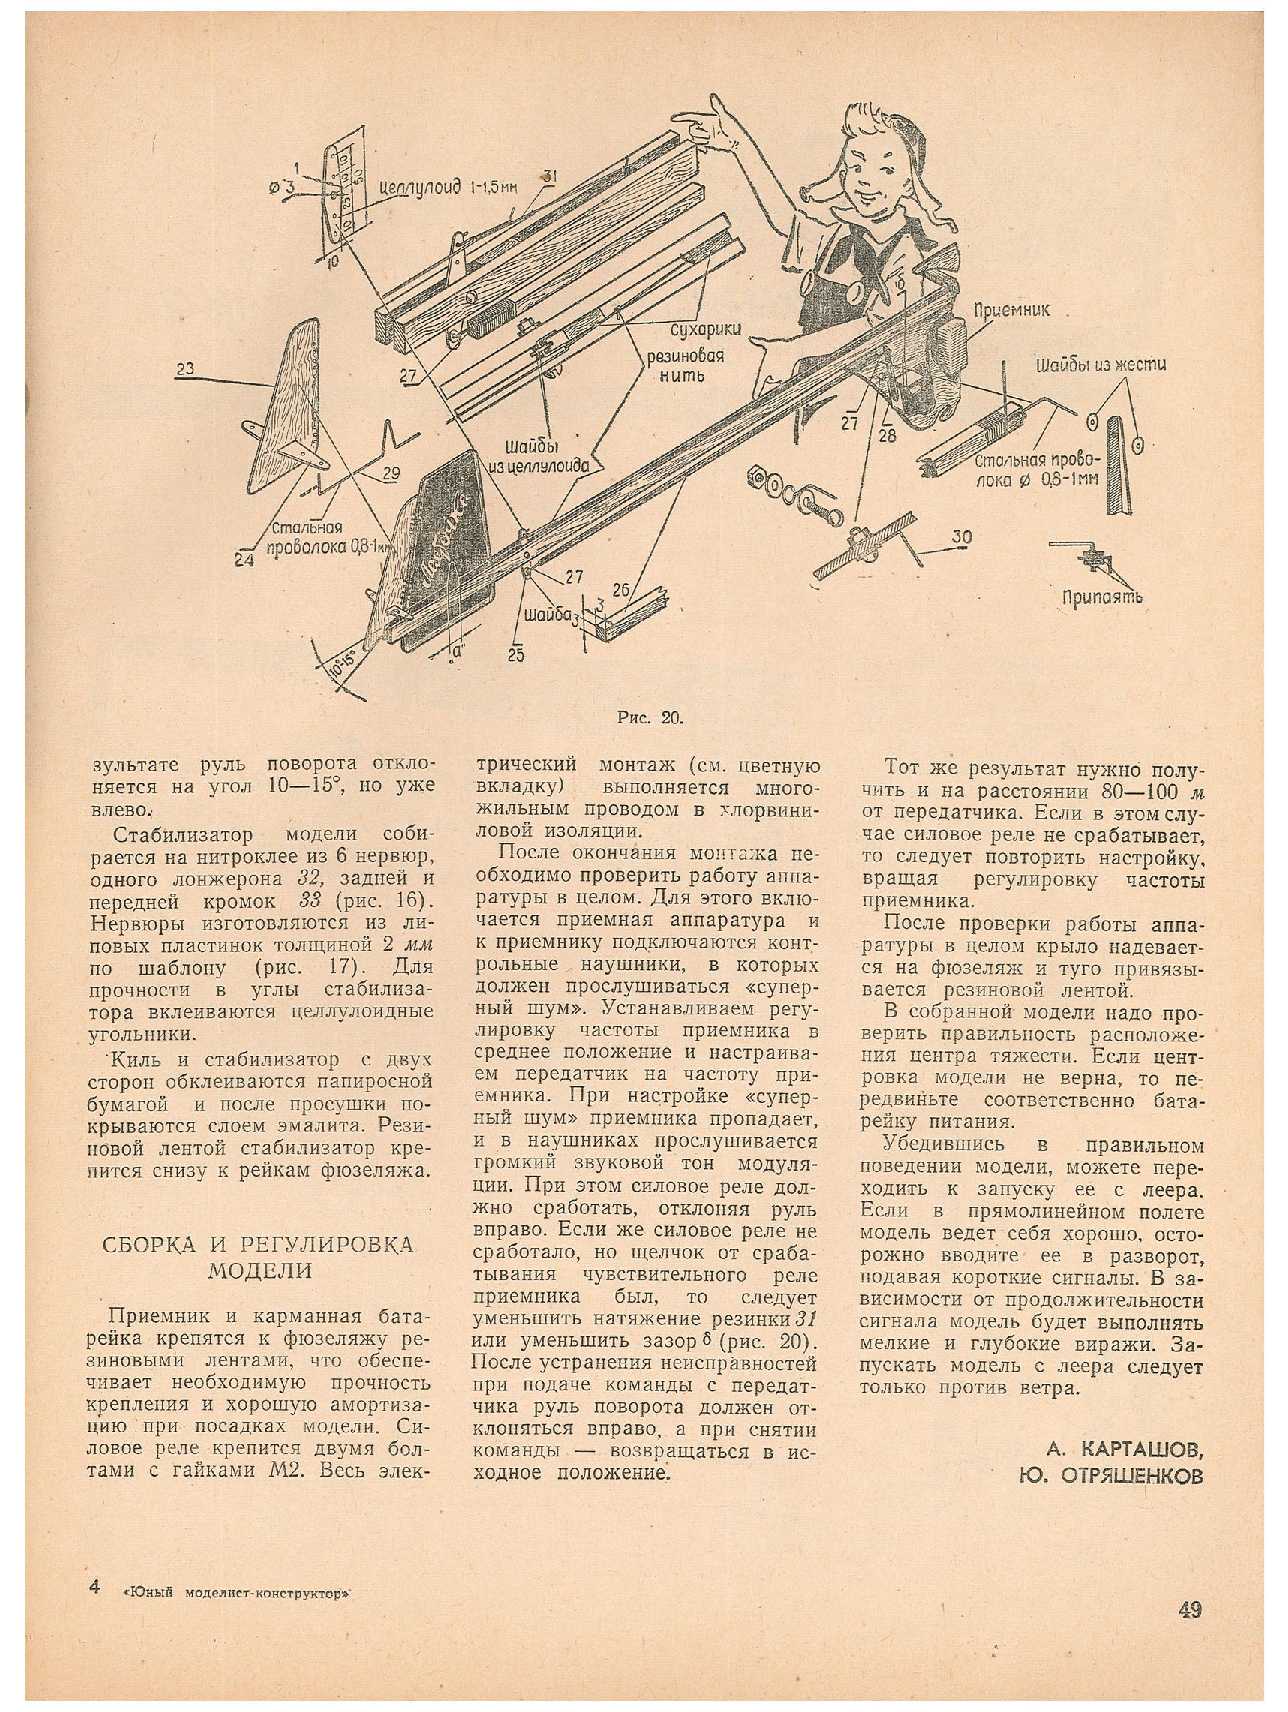 ЮМК 3, 1962, 49 c.